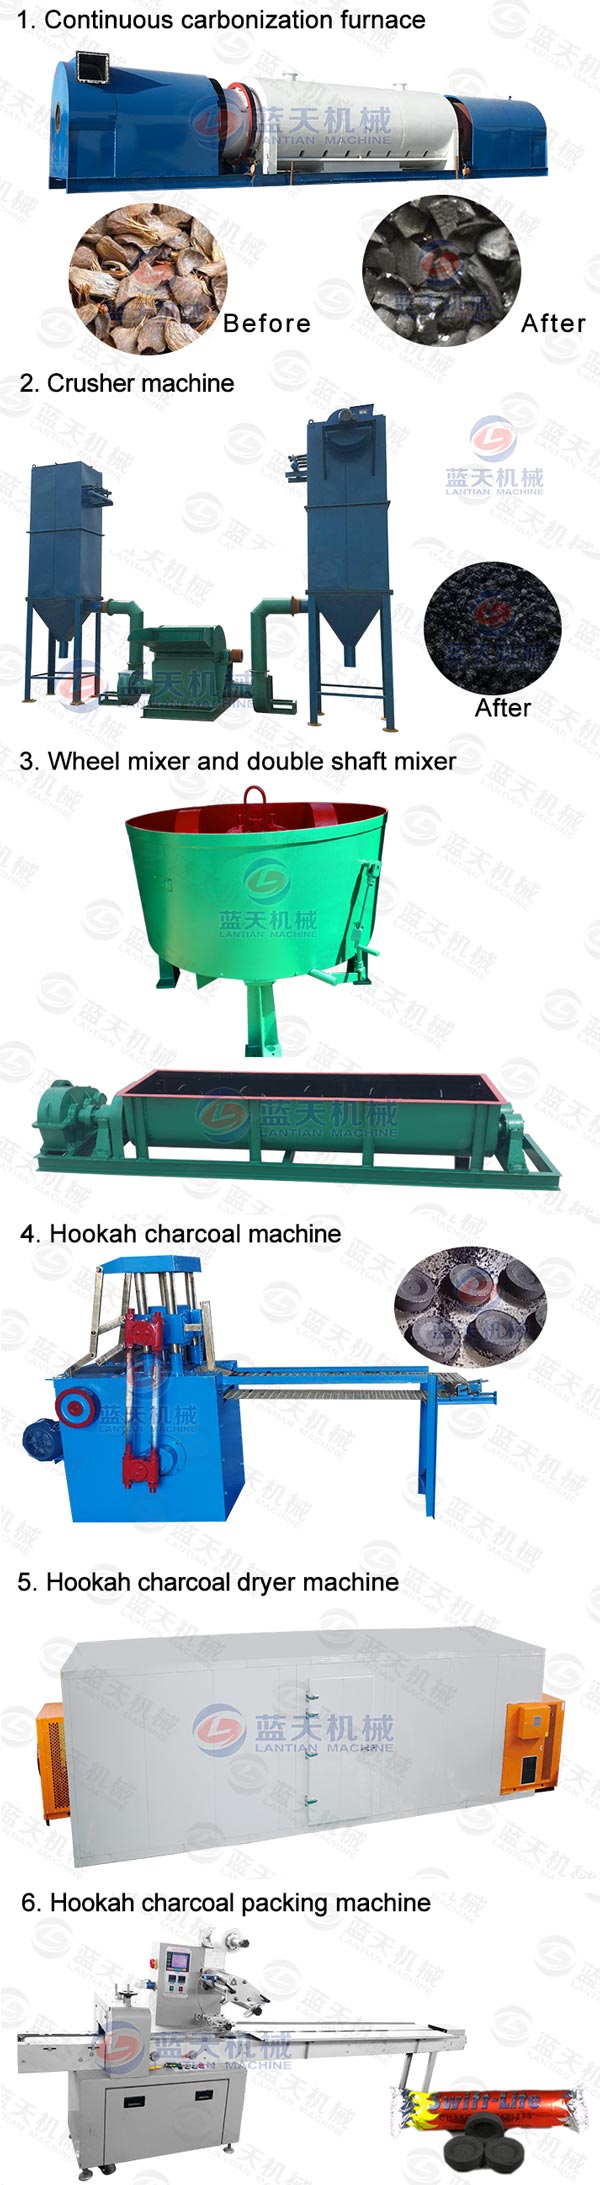 hydraulic hookah charcoal machine production line